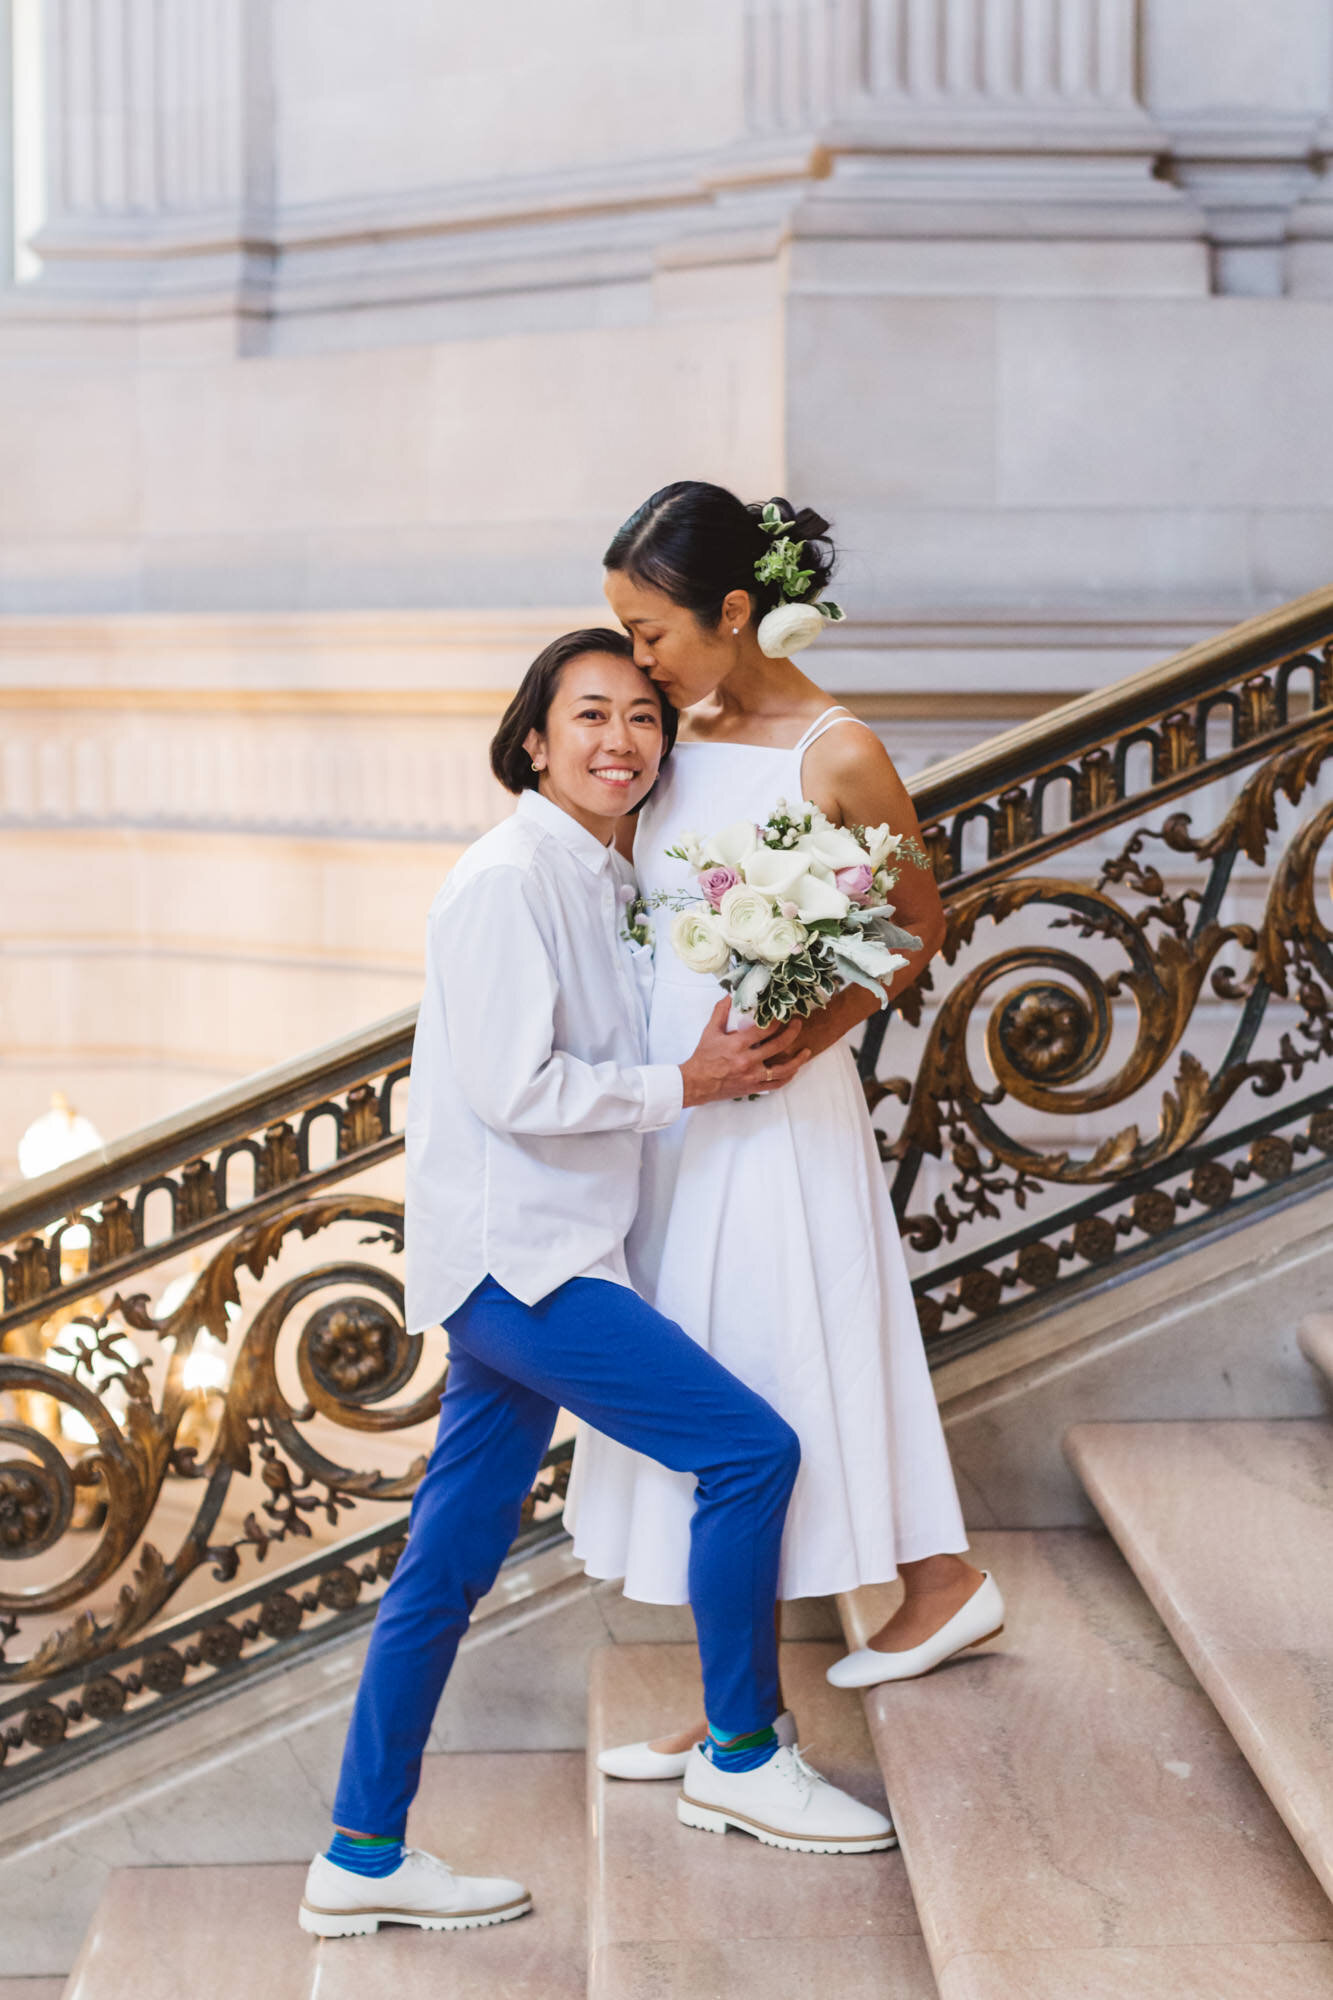 San Francisco City Hall wedding photos with lesbian couple